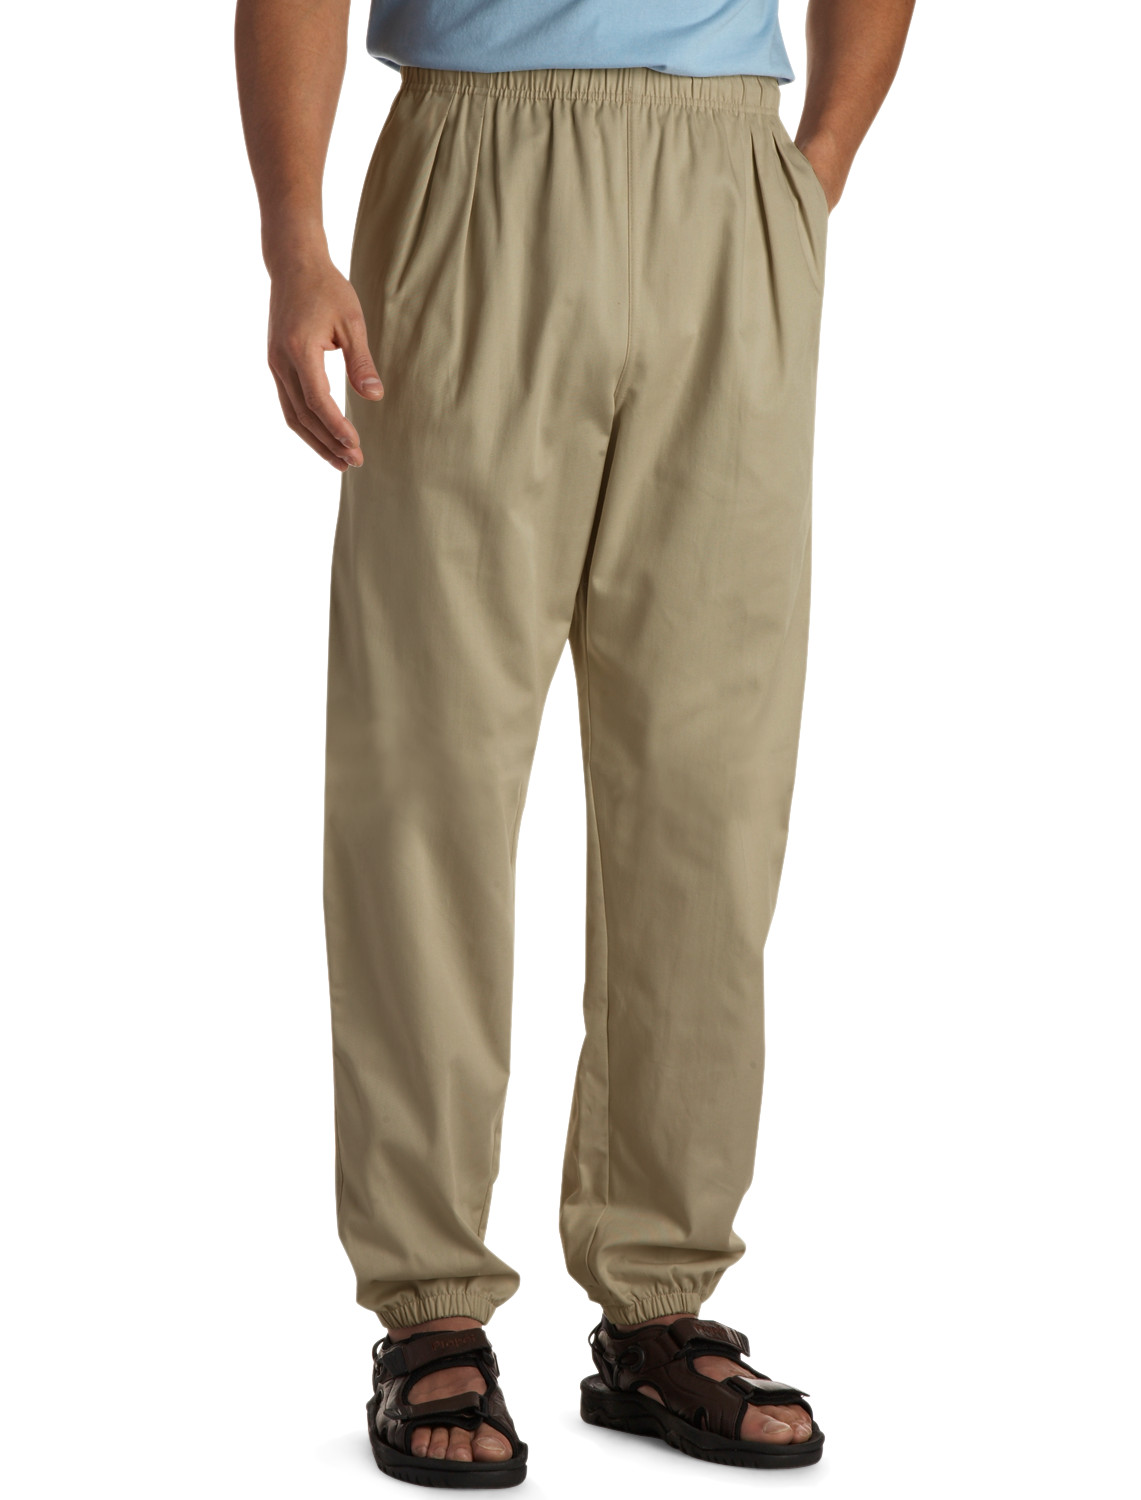 Canyon Ridge Cotton Twill Beach Pants Casual Male XL Big & Tall | eBay